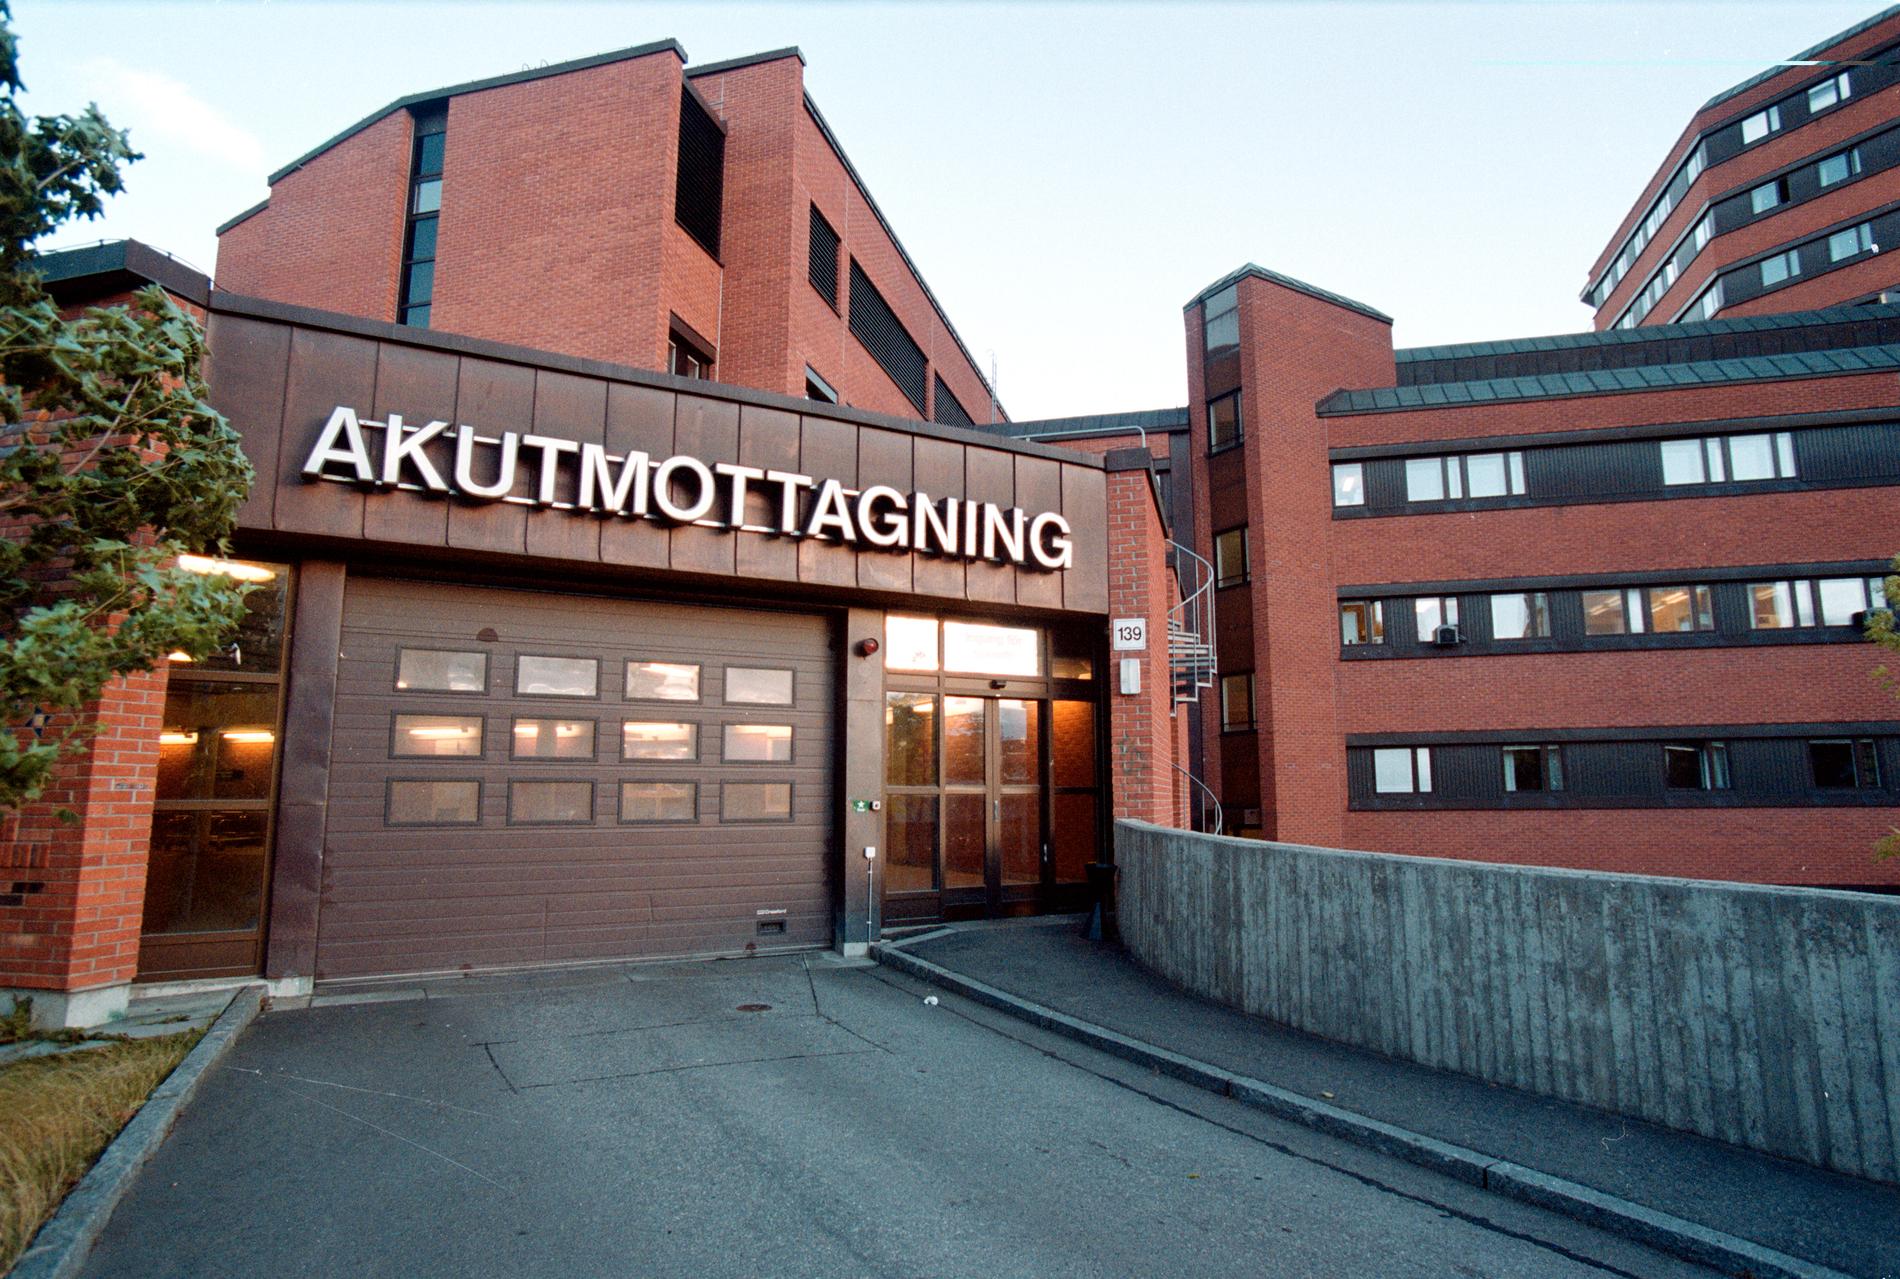  S:t Görans sjukhus i Stockholm. 